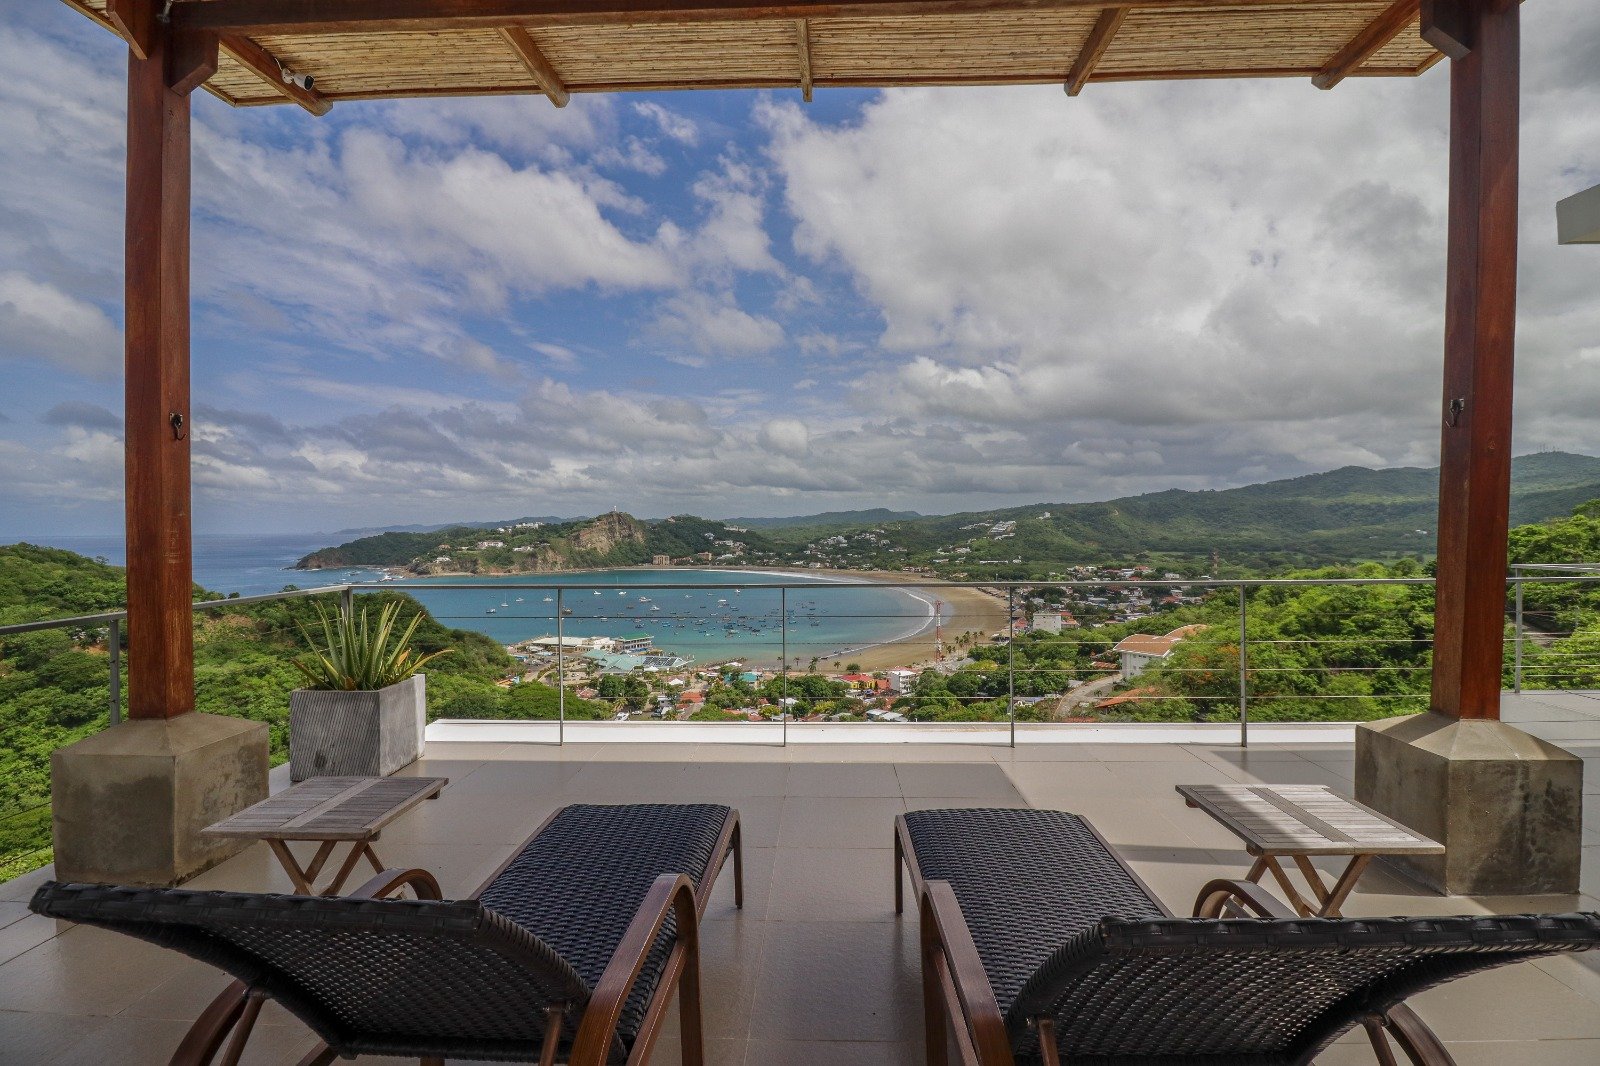 Two bedroom ocean view home for sale property real estate San Juan Del Sur (5).jpeg